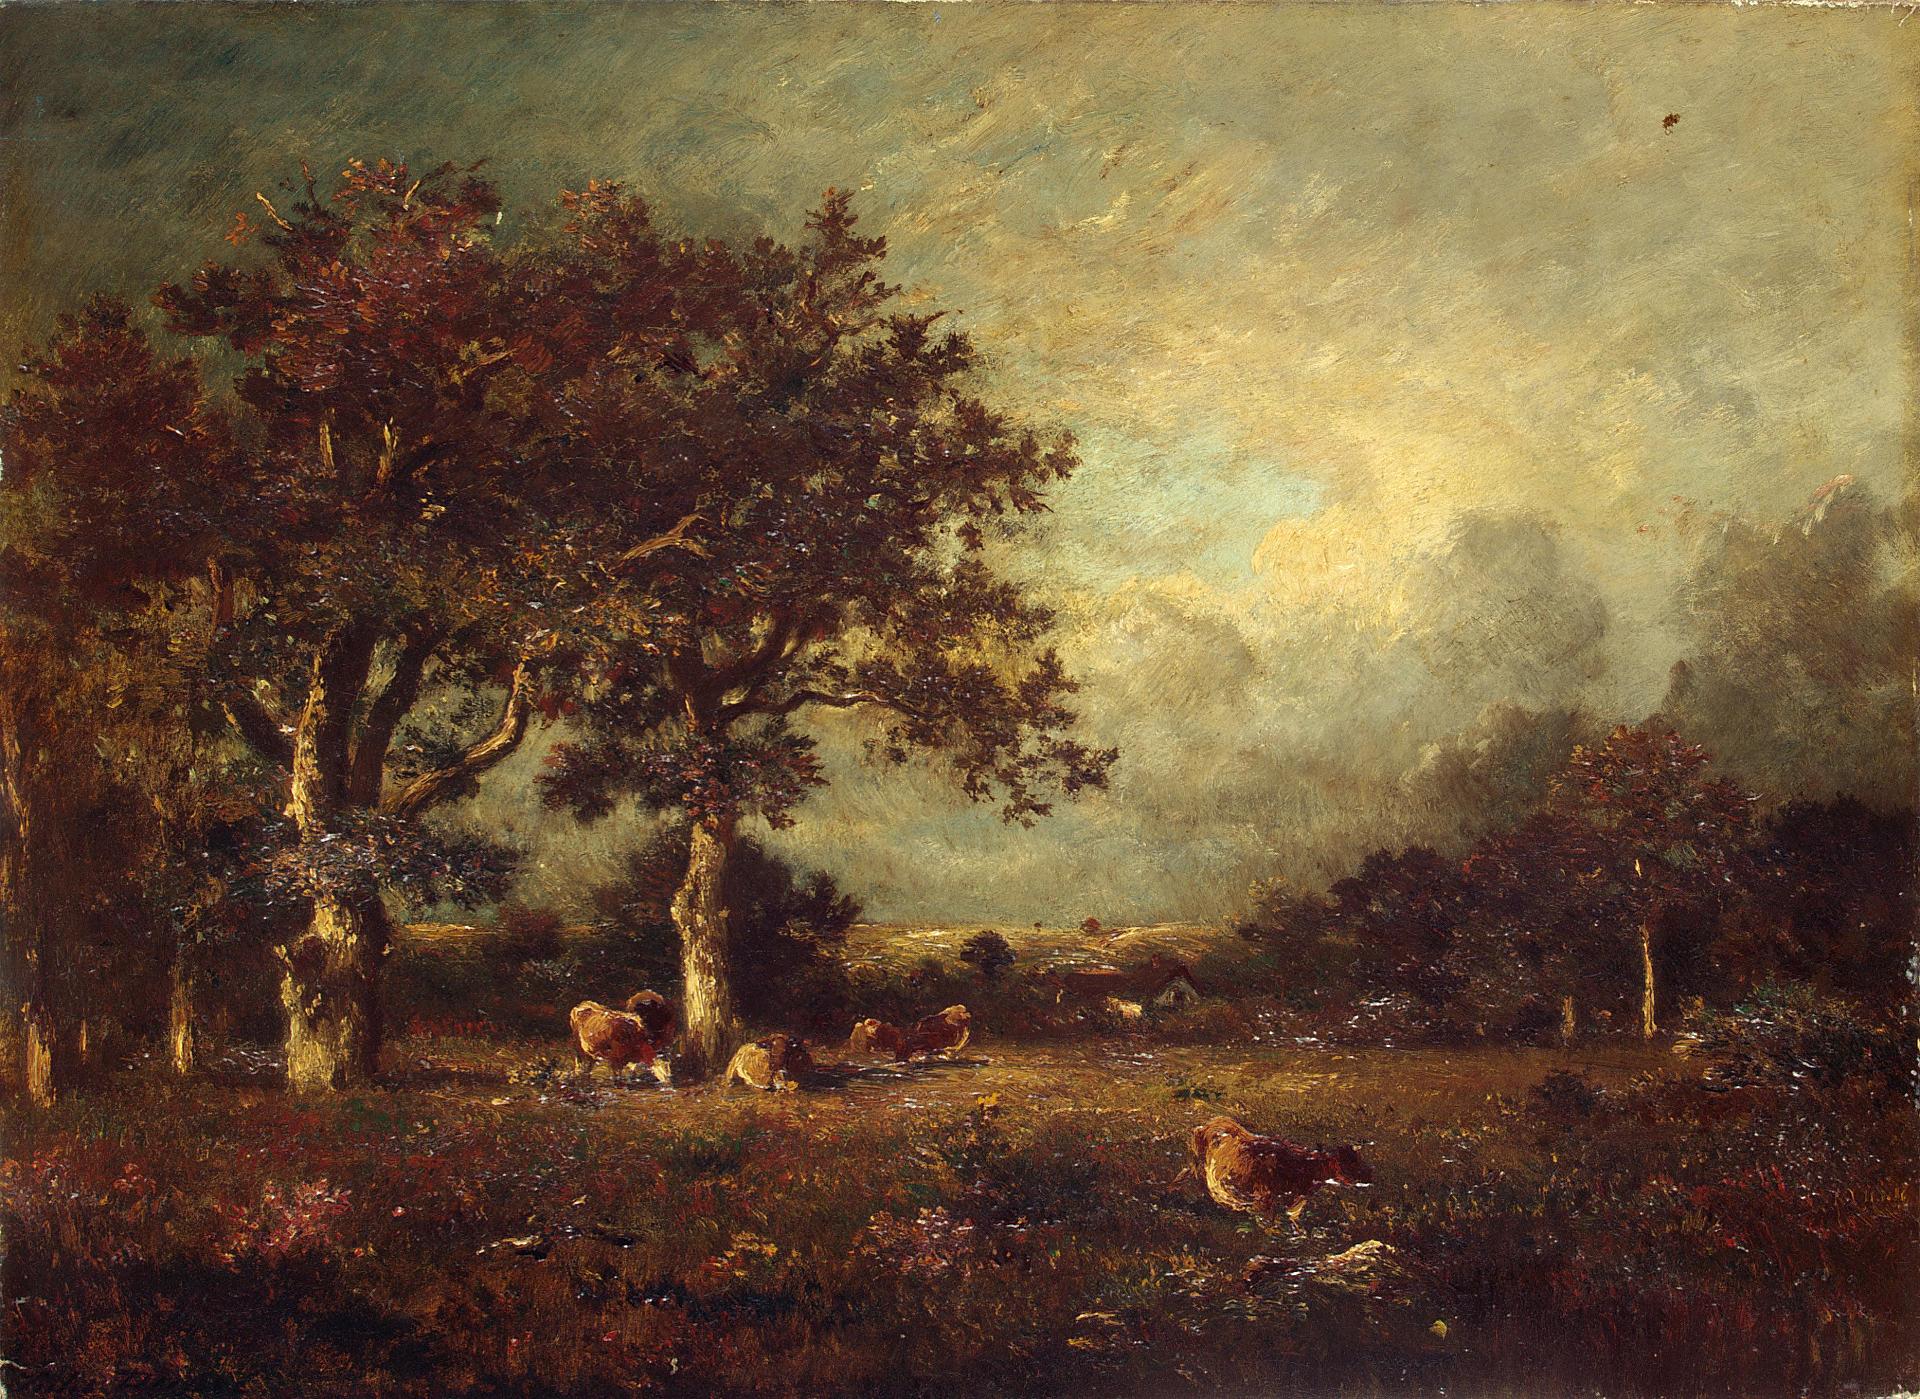 Жюль Дюпре. "Пейзаж с коровами". 1870-е. Эрмитаж, Санкт-Петербург.